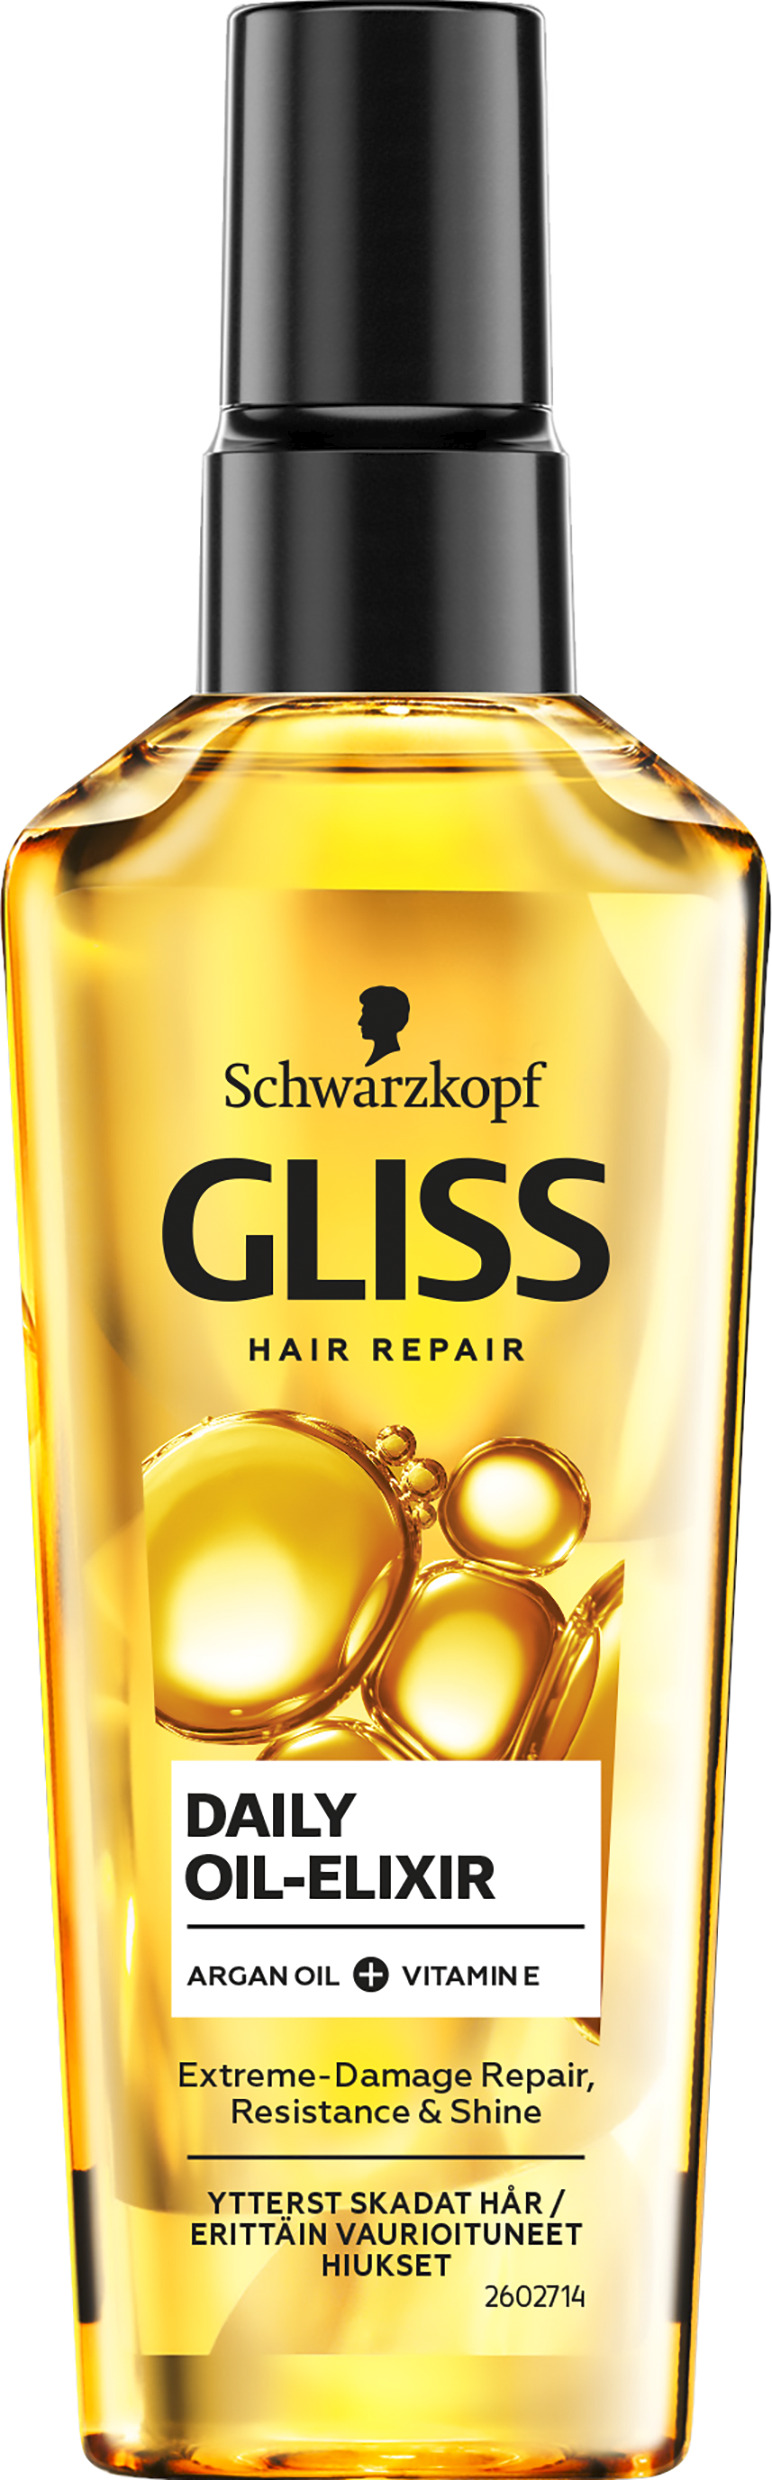 Schwarzkopf Gliss  Daily Oil-Elixir 75 ml